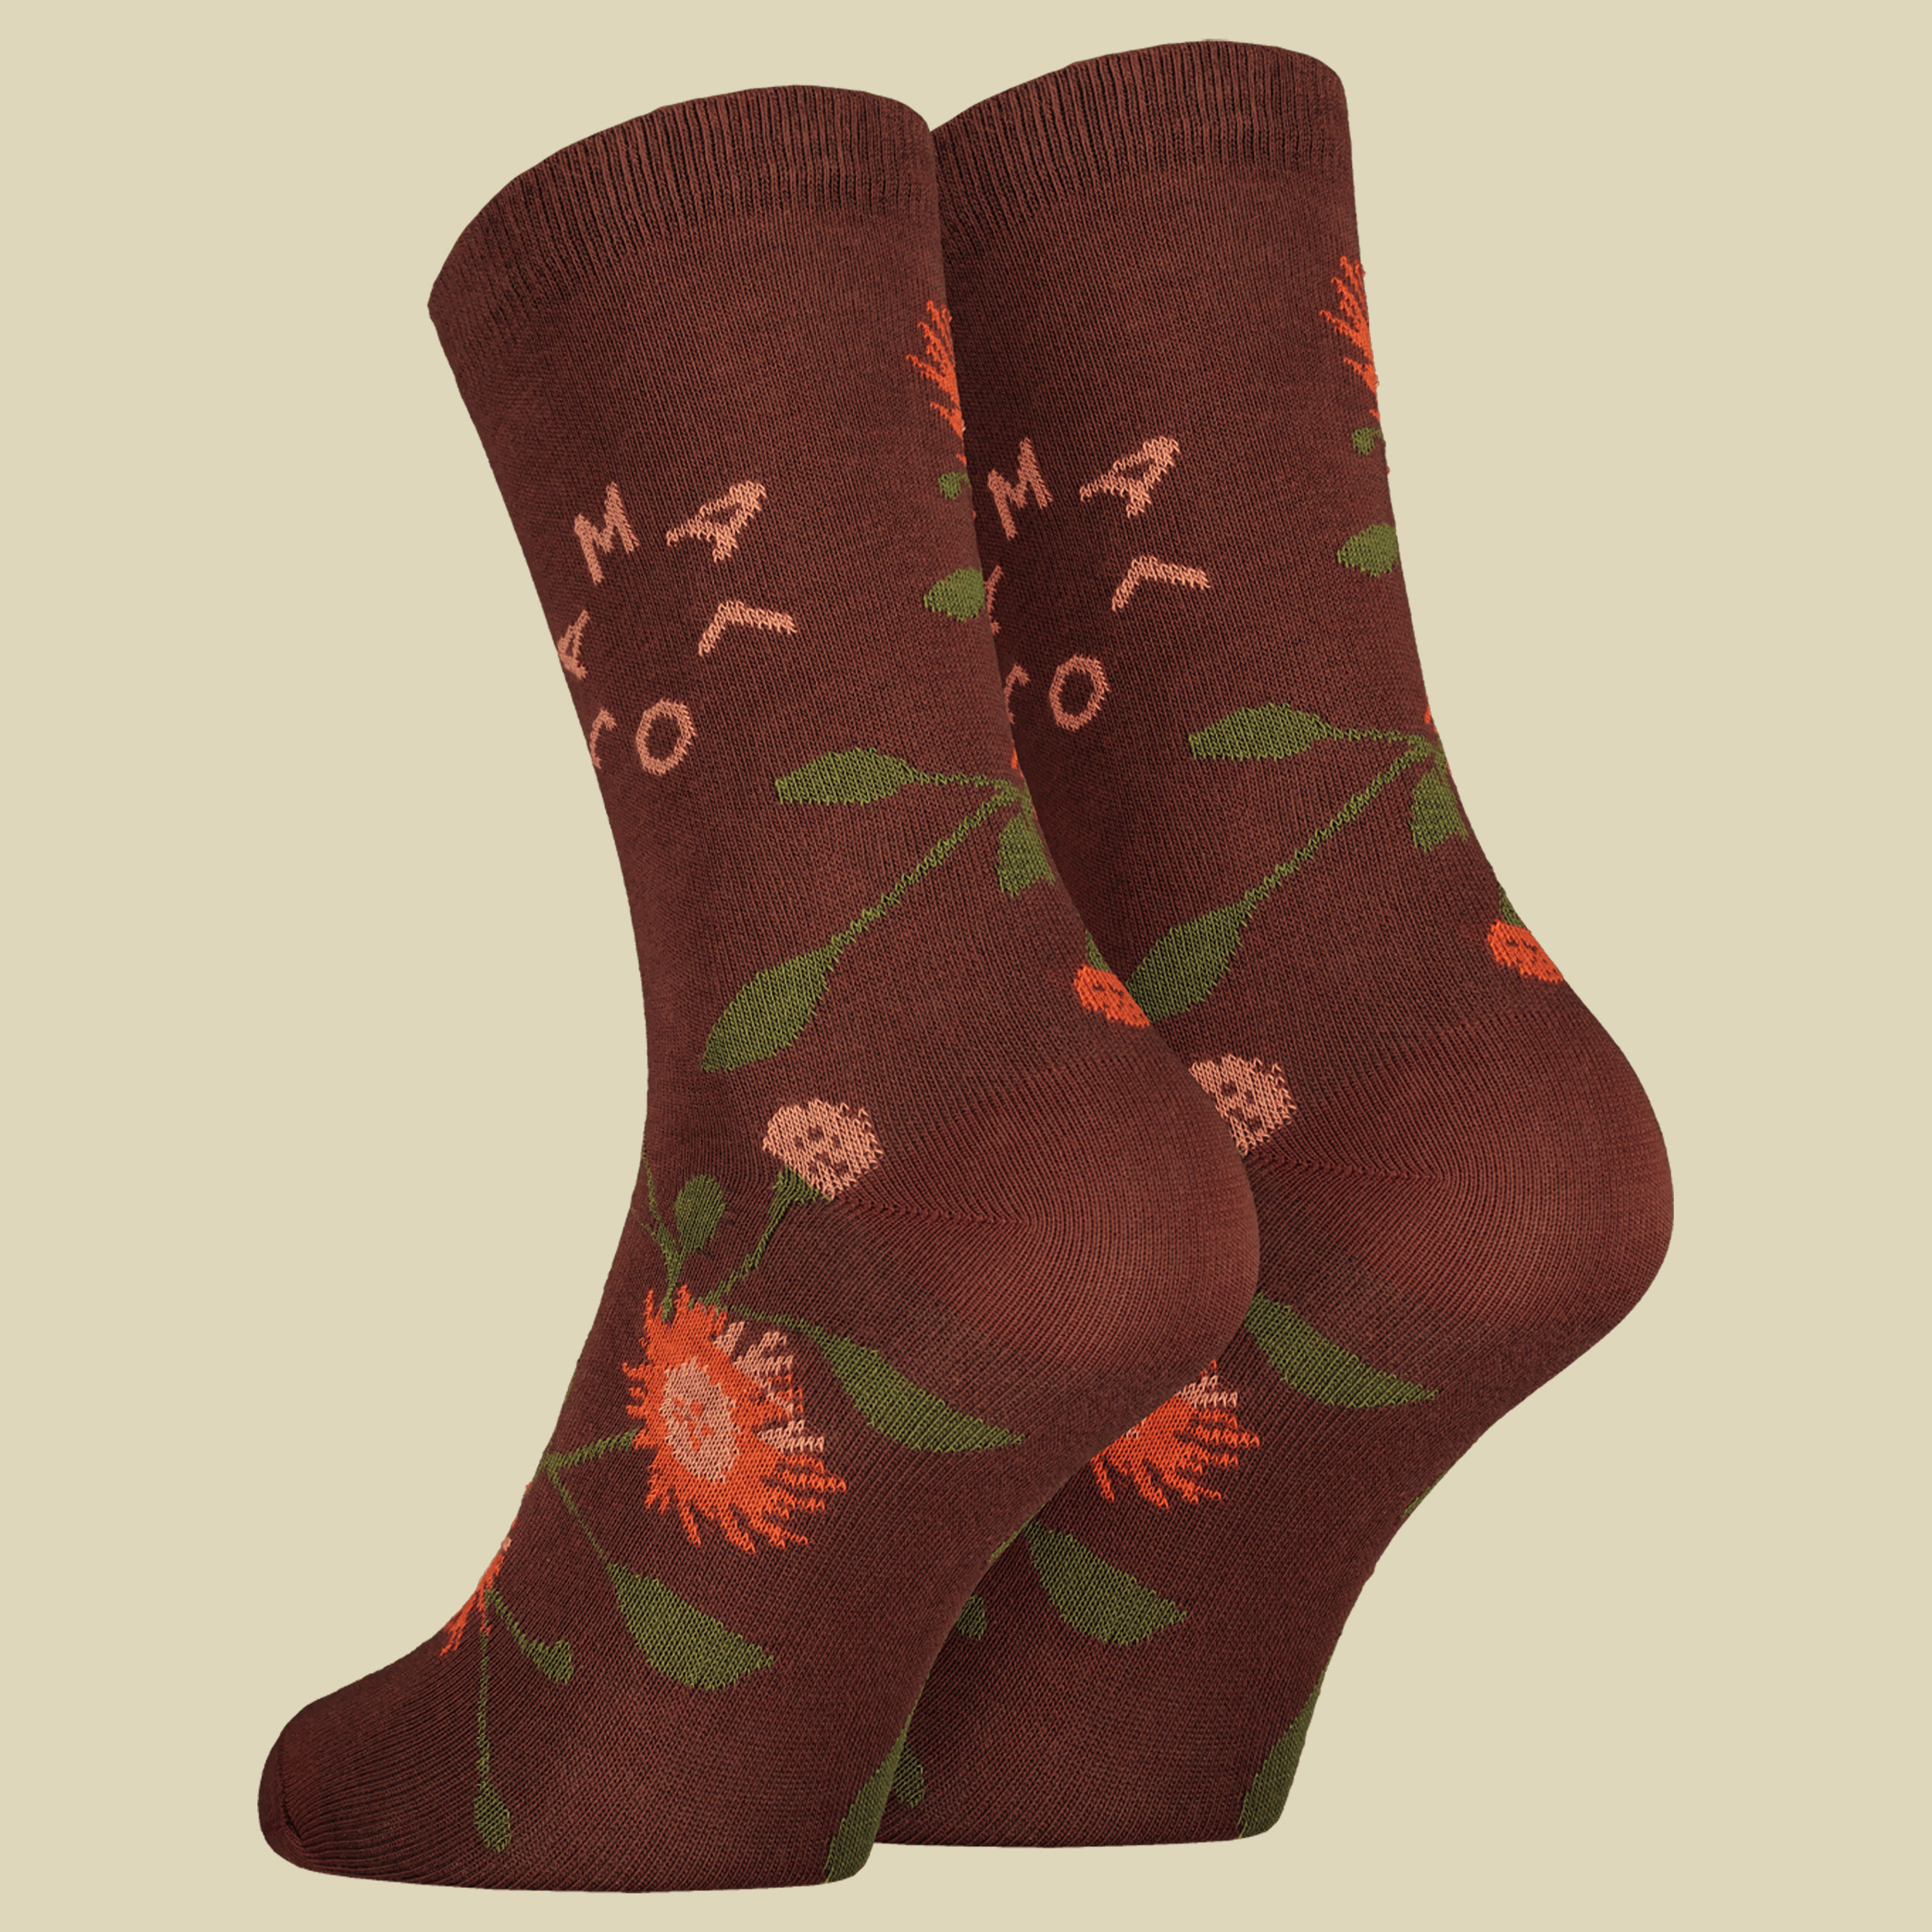 FregonaM. Socks Größe 39-42 Farbe chestnut